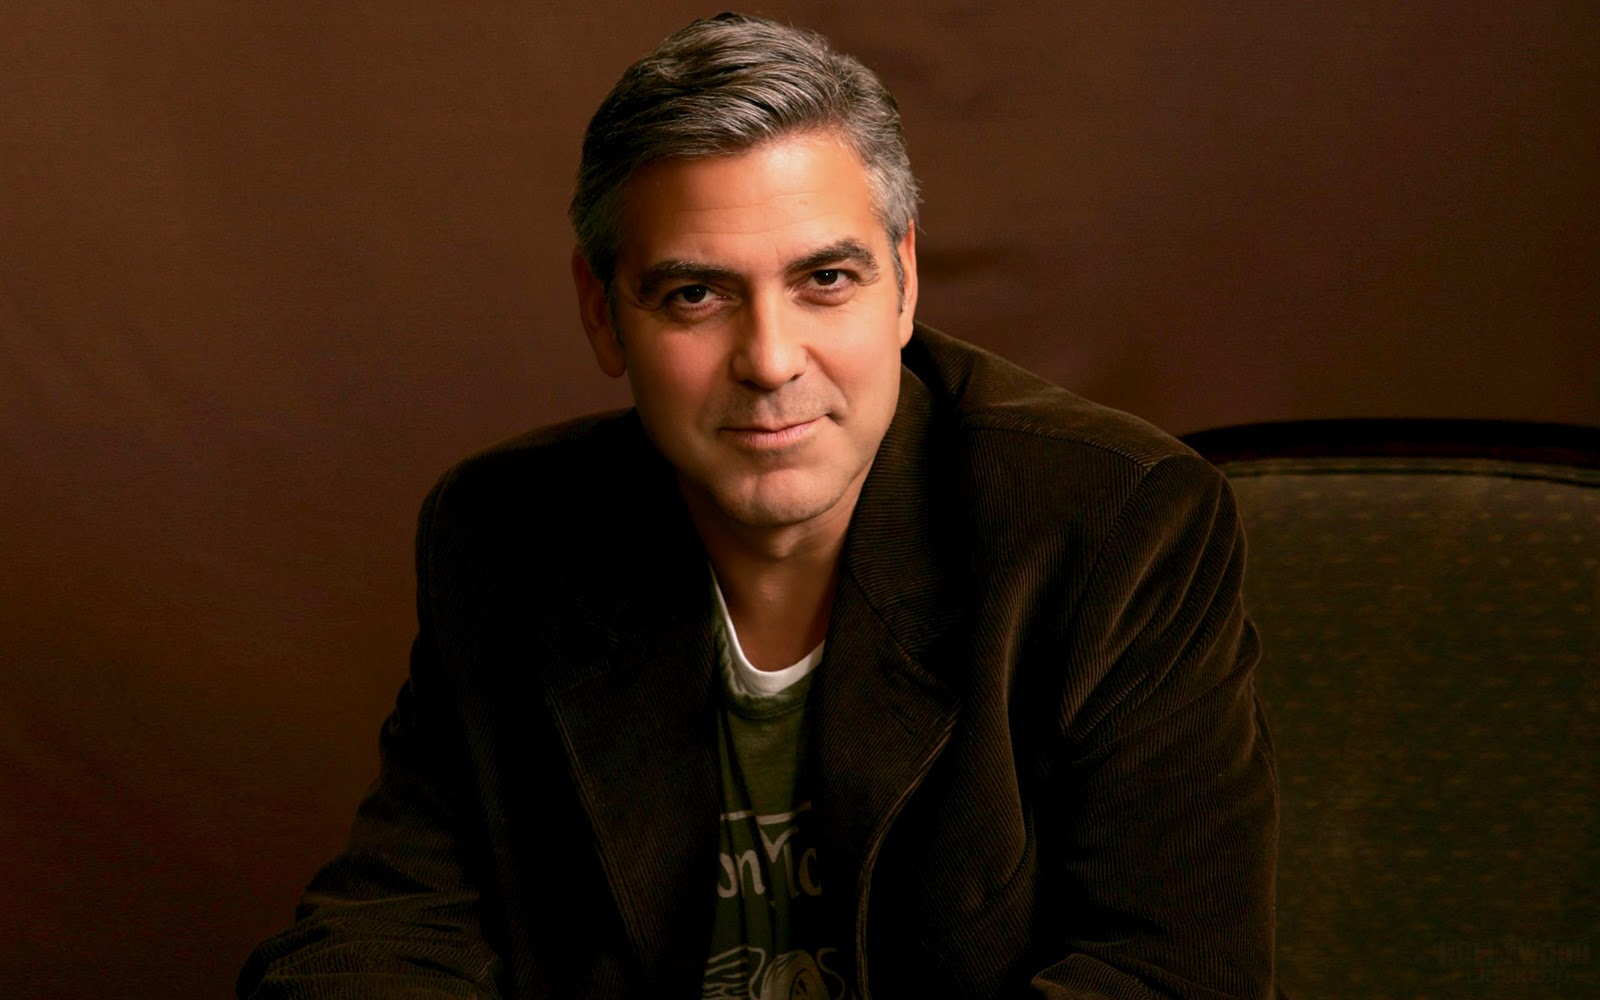 http://3.bp.blogspot.com/-o9N9Y0NKW9U/TwHceqKbU2I/AAAAAAAADFc/SNlO4ZtV8dU/s1600/George-Clooney-0-hwoodworld.blogspot.com.jpg